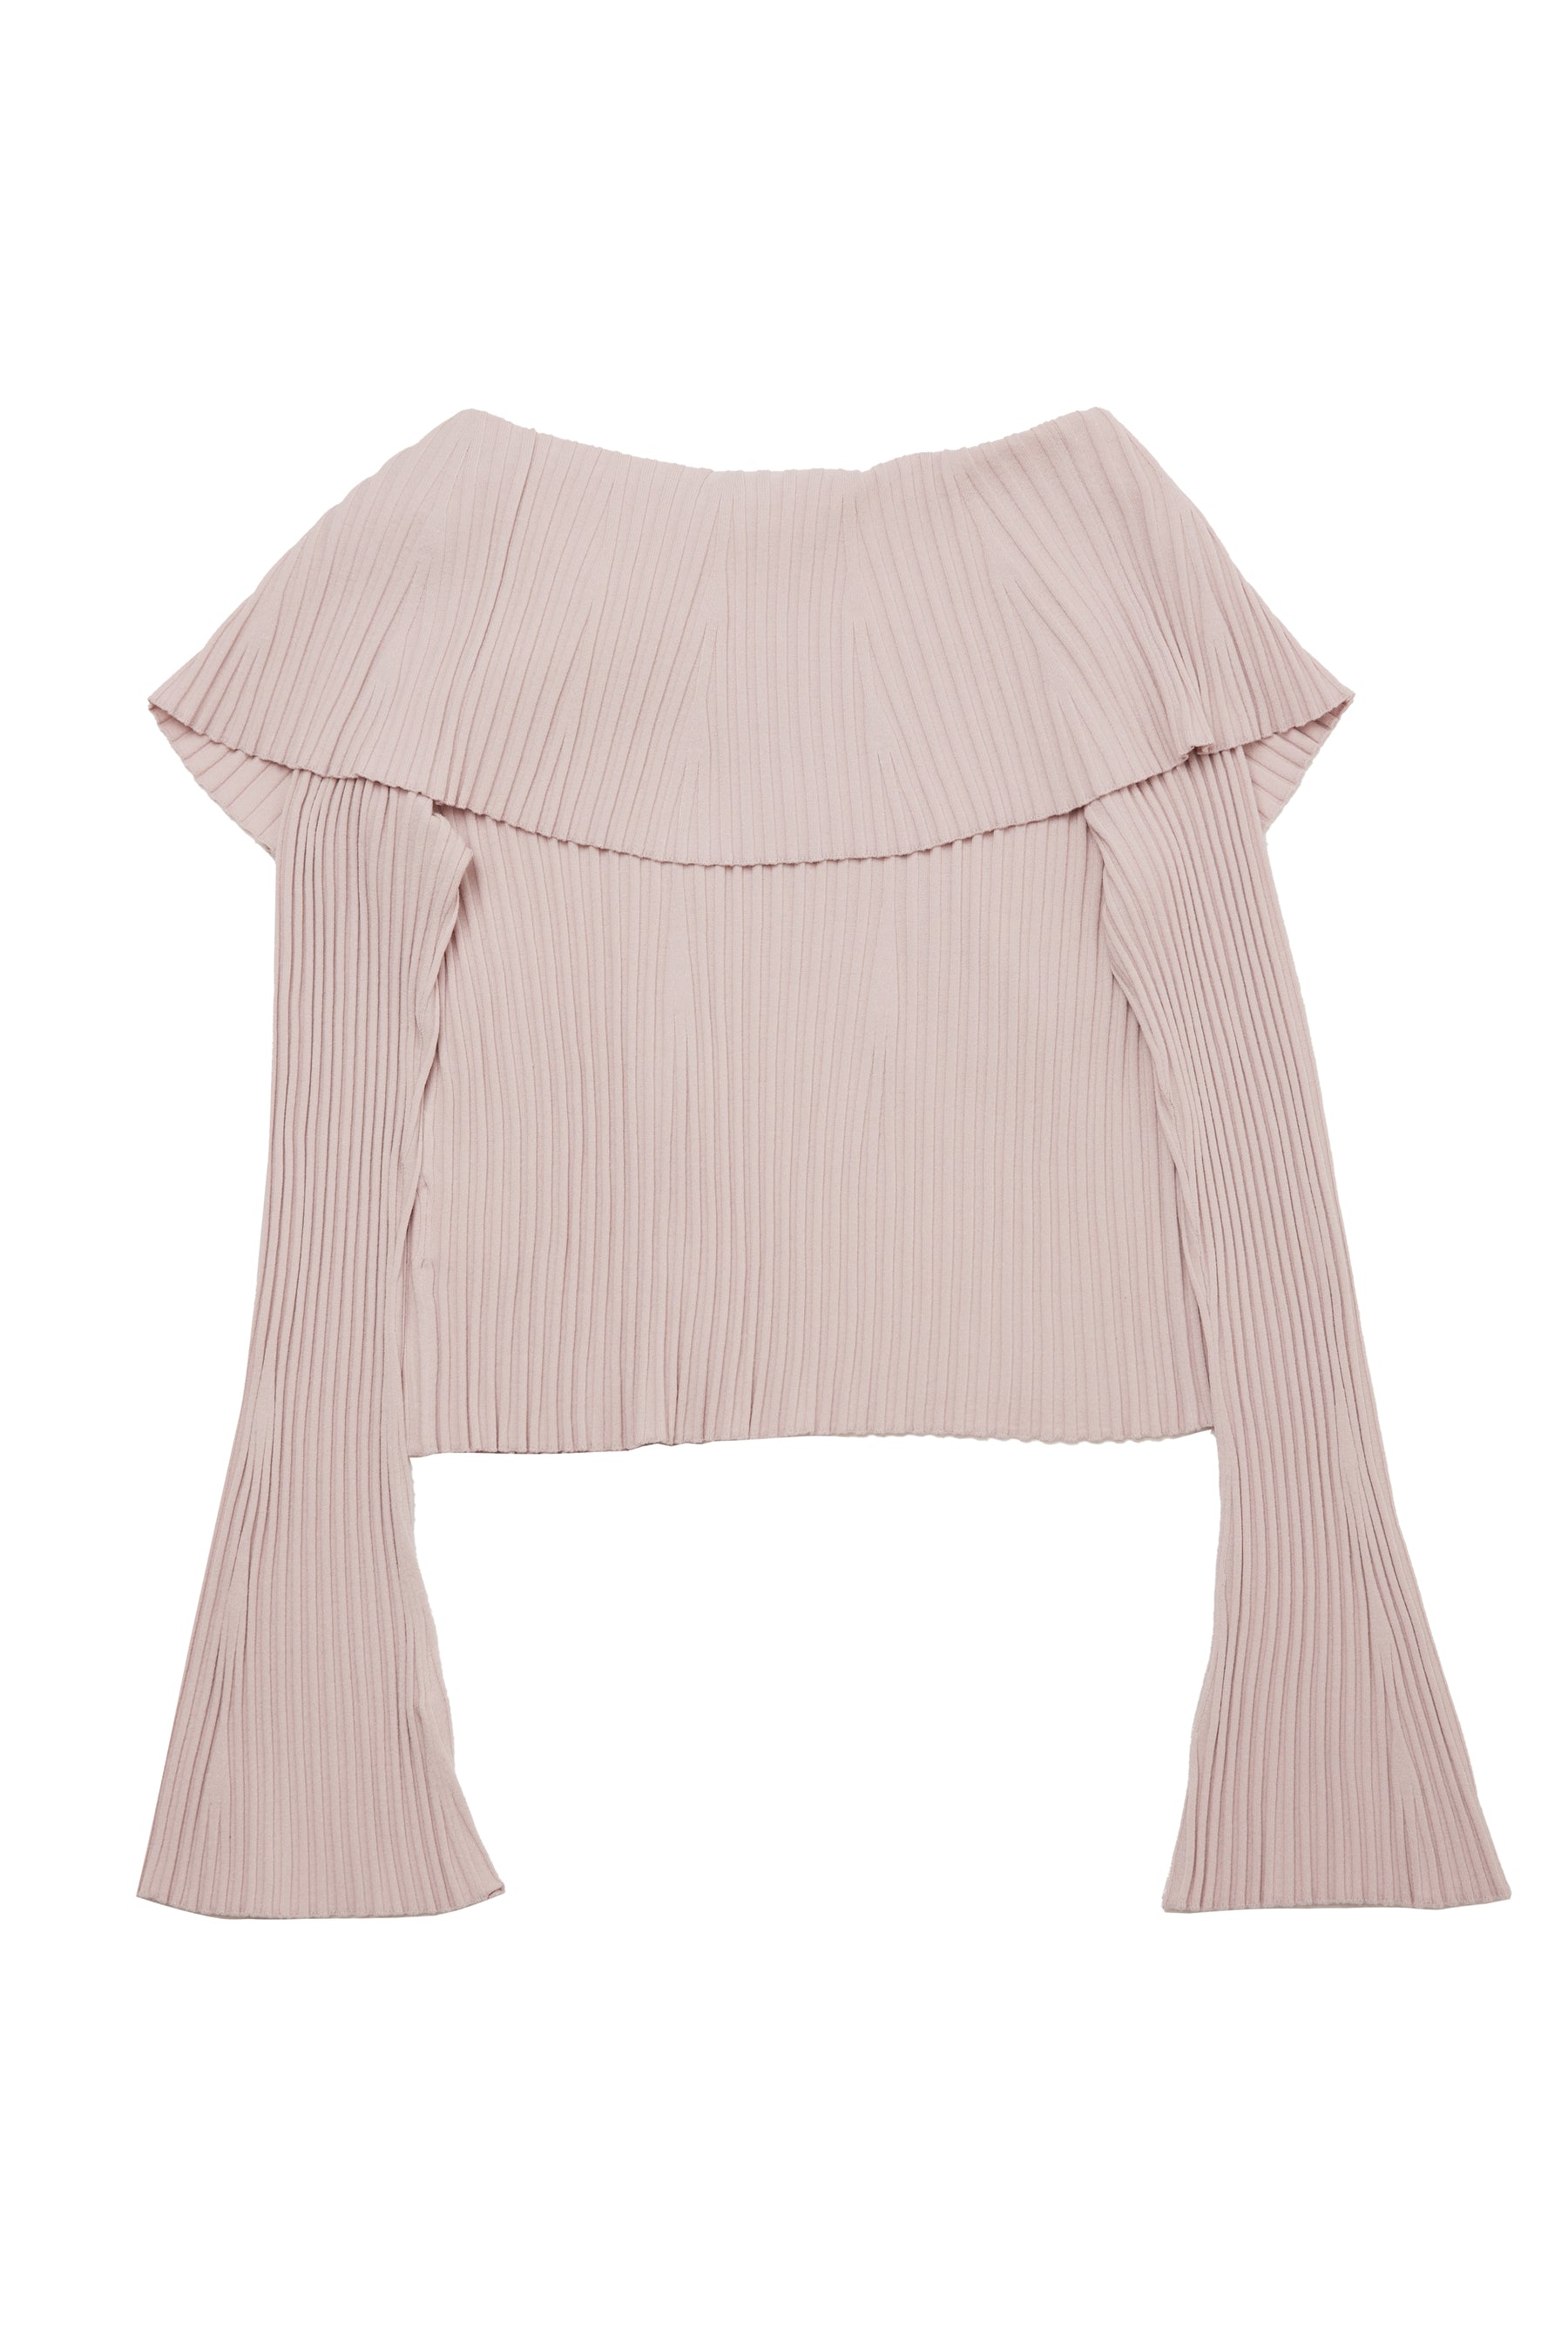 [New color] Big Collar Ribbed Knit Top